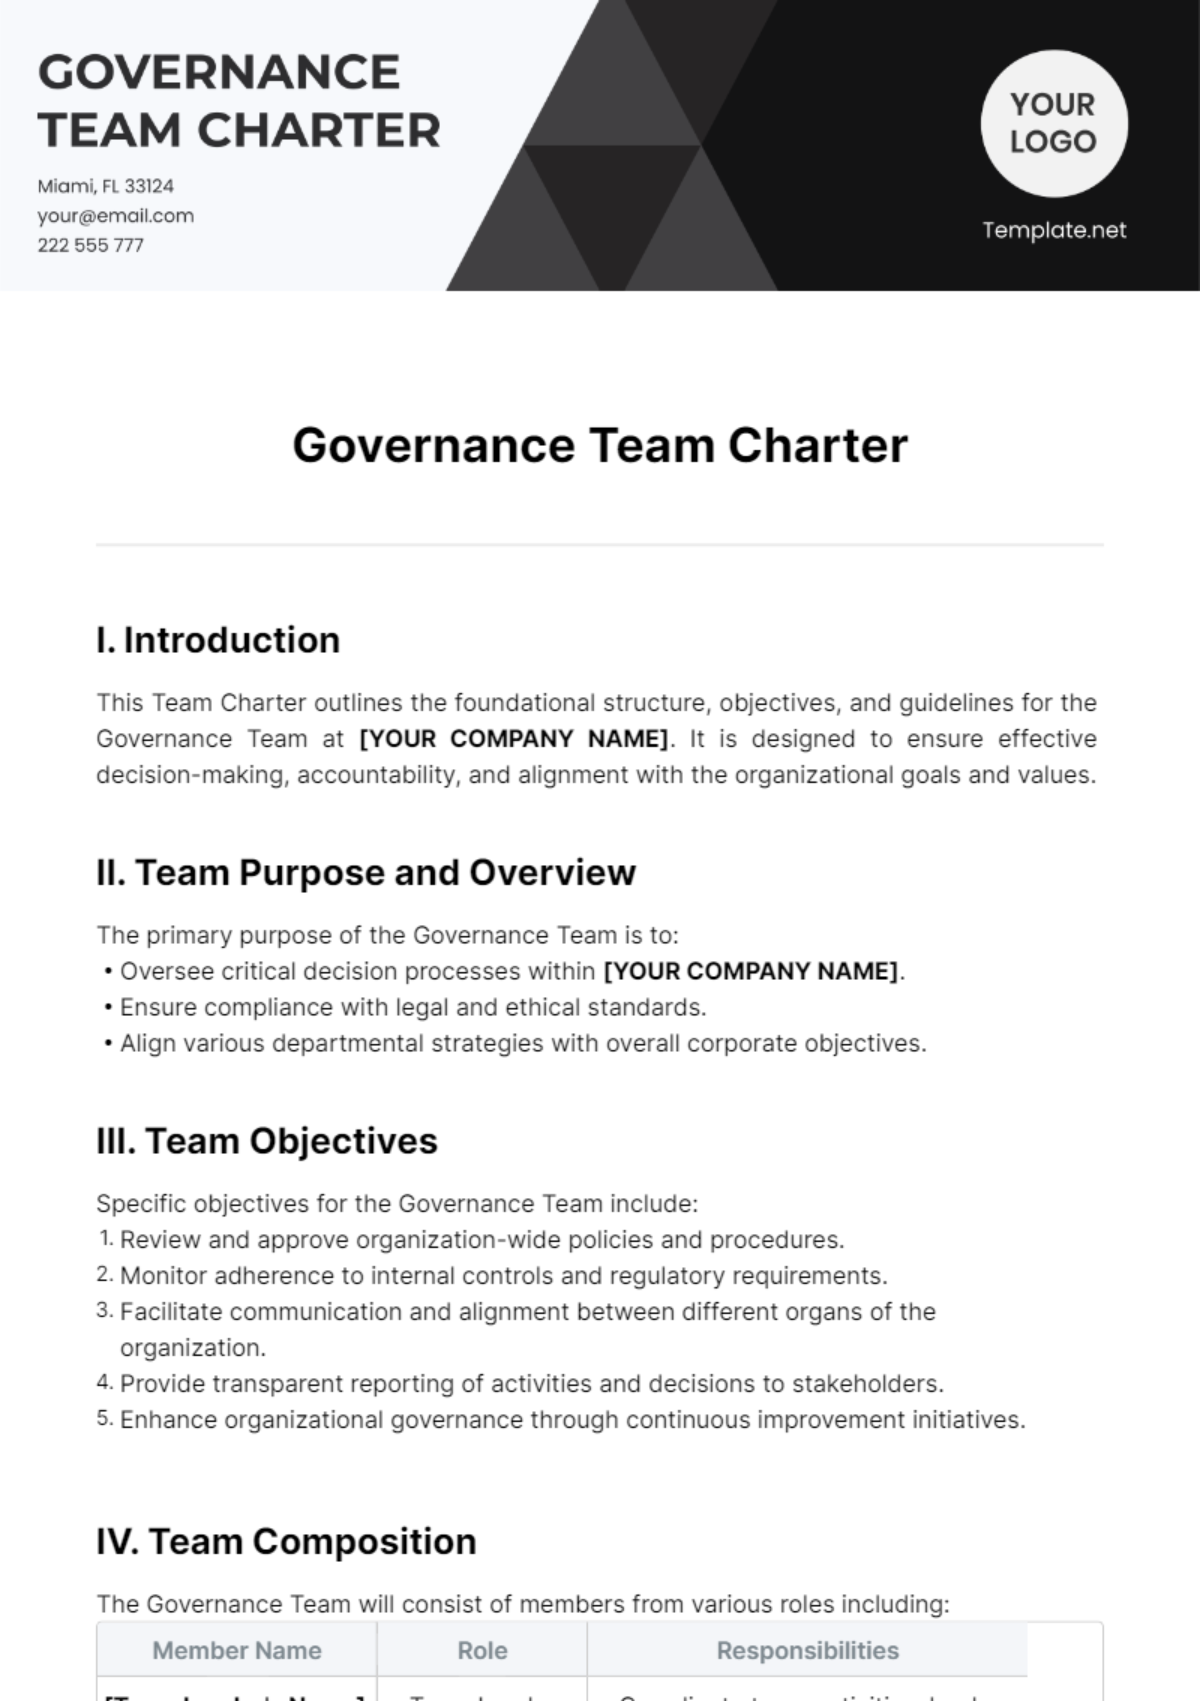 Governance Team Charter Template